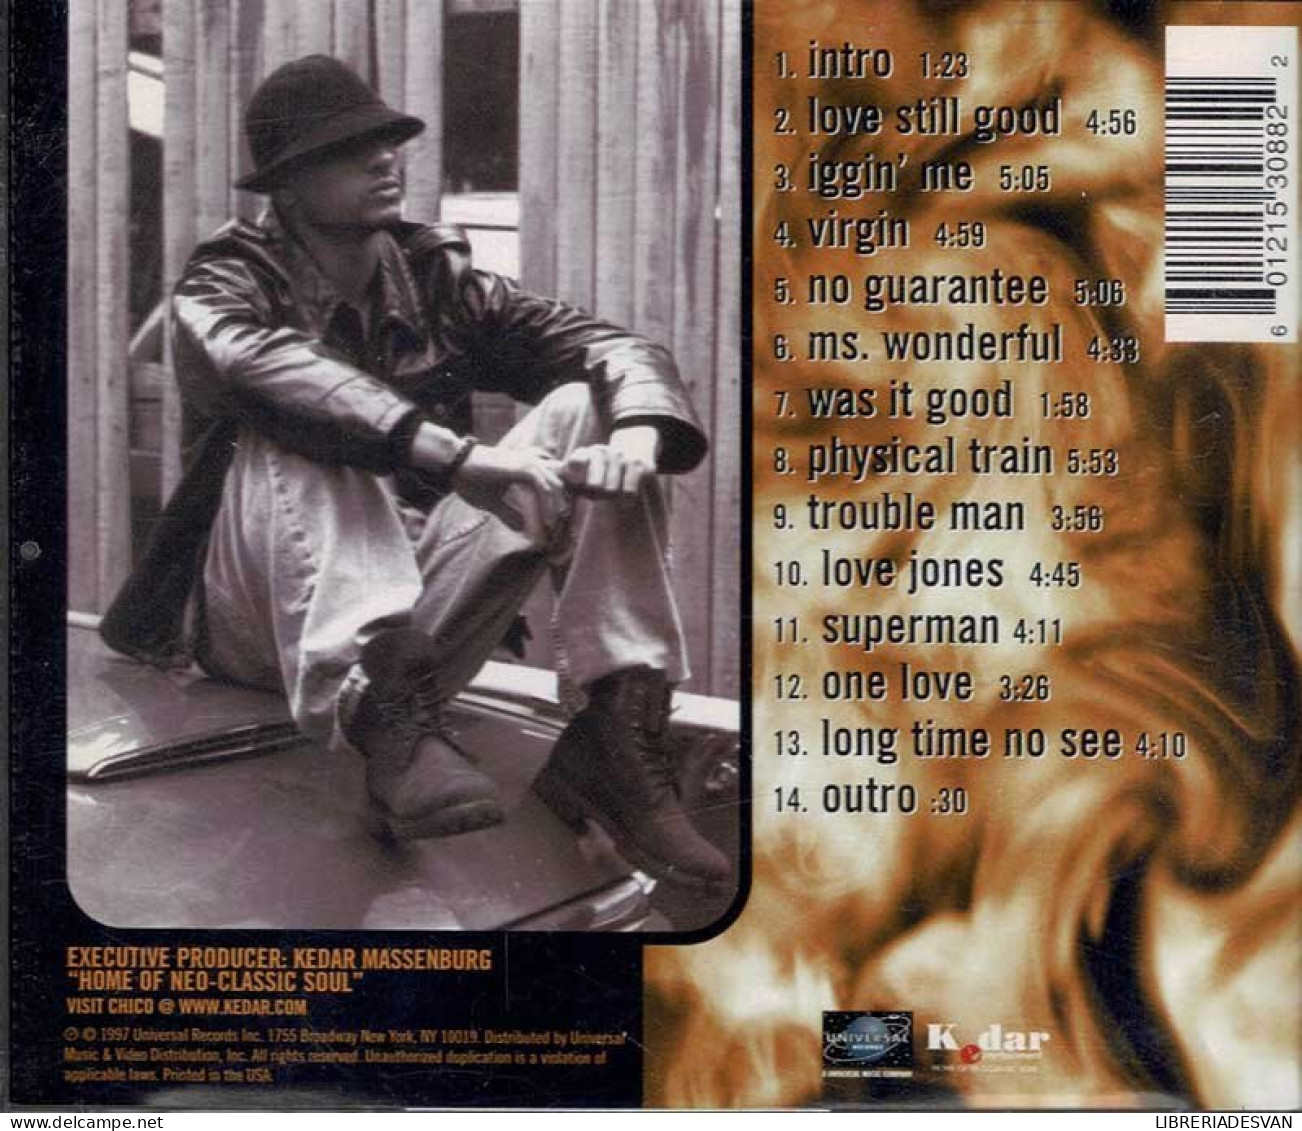 Chico DeBarge - Long Time No See. CD - Jazz